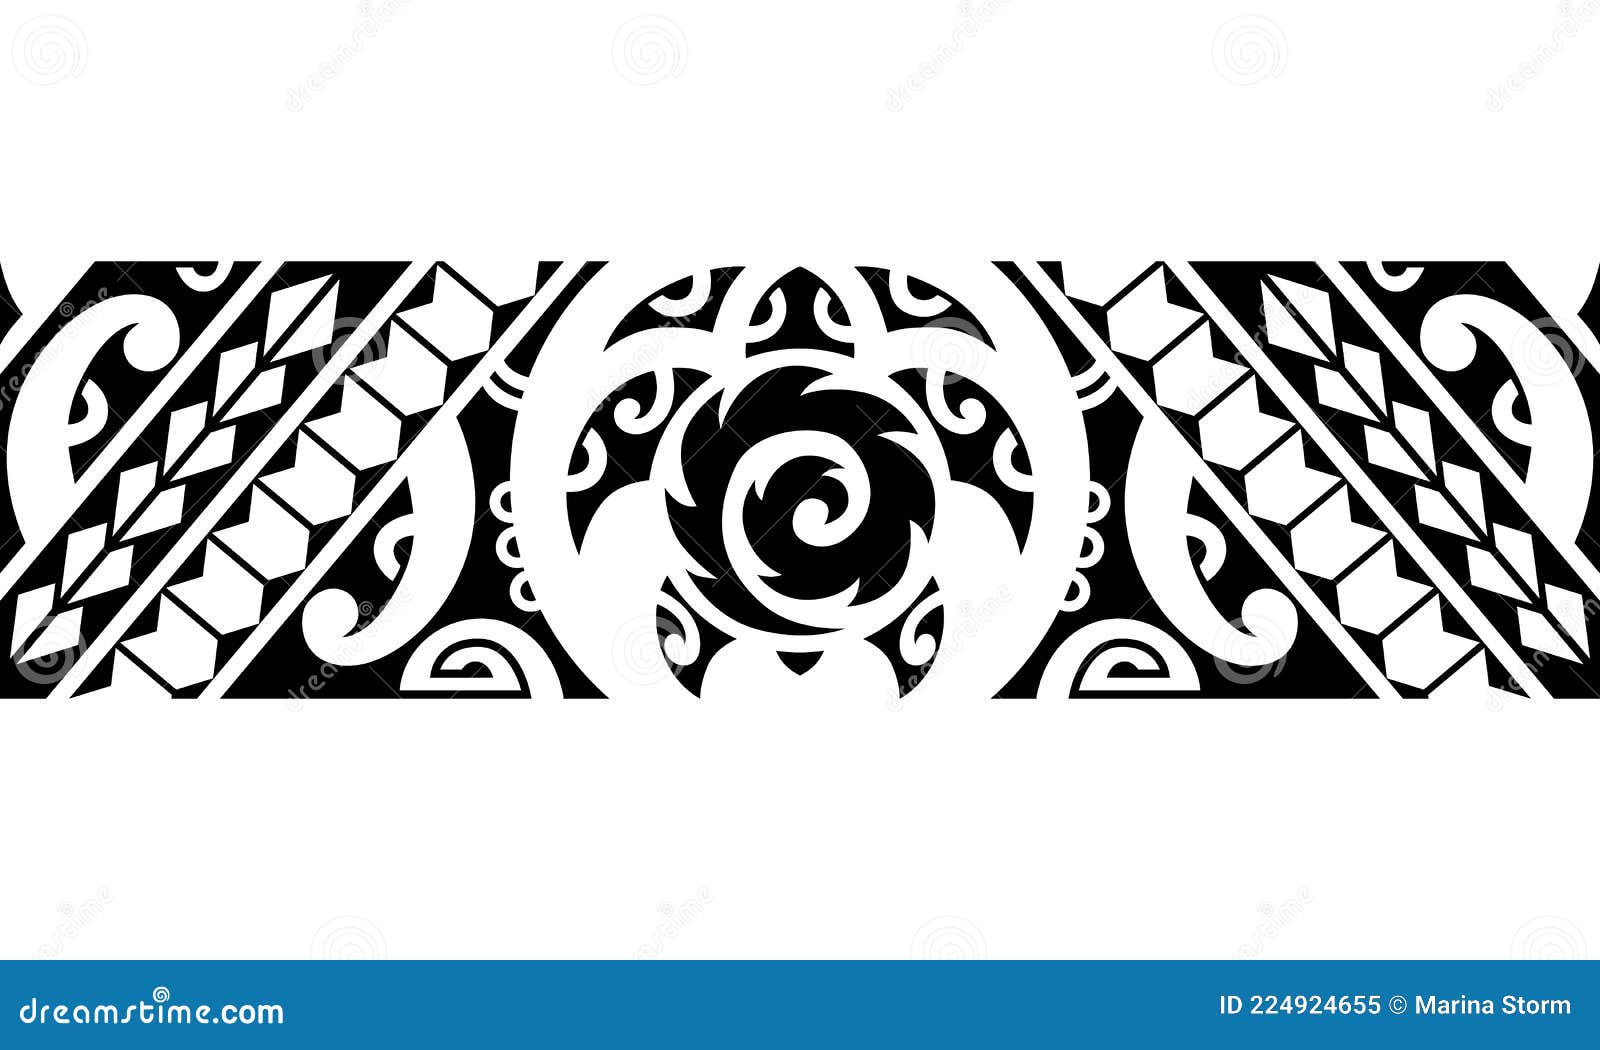 Tattoo stunners  Maori armband tattoo design Work  Facebook